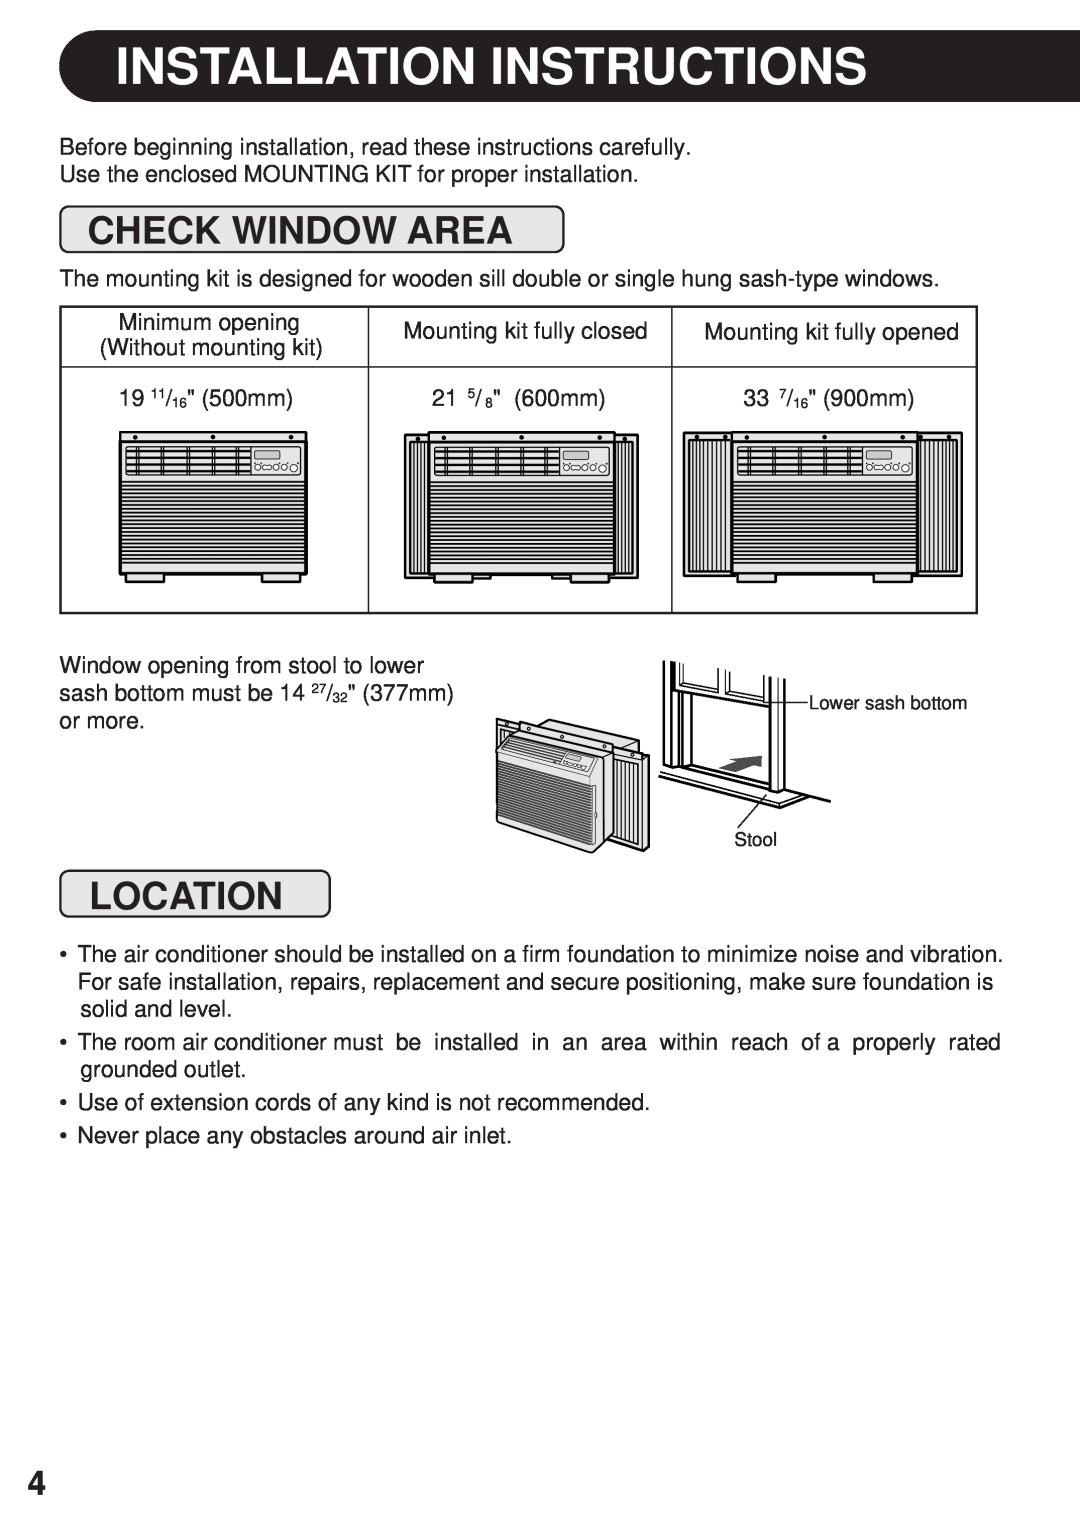 Sharp AF-R85CX, AF-R80CX, AF-S80CX operation manual Installation Instructions, Check Window Area, Location 